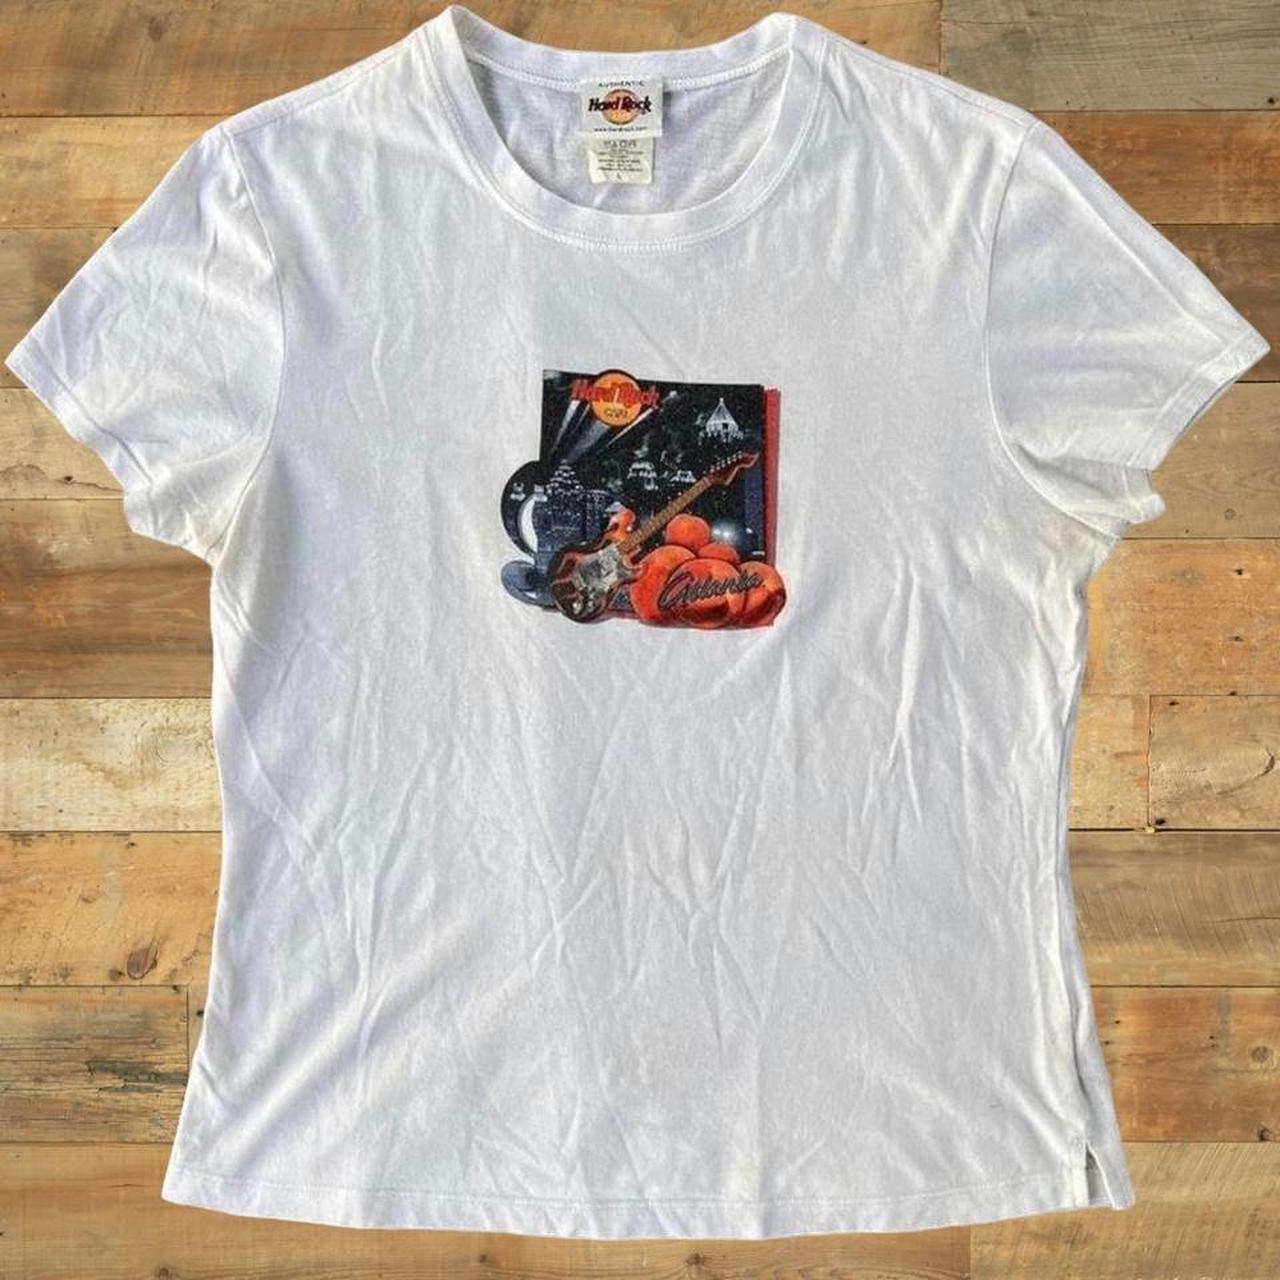 Hard Rock Cafe Women's White and Orange T-shirt